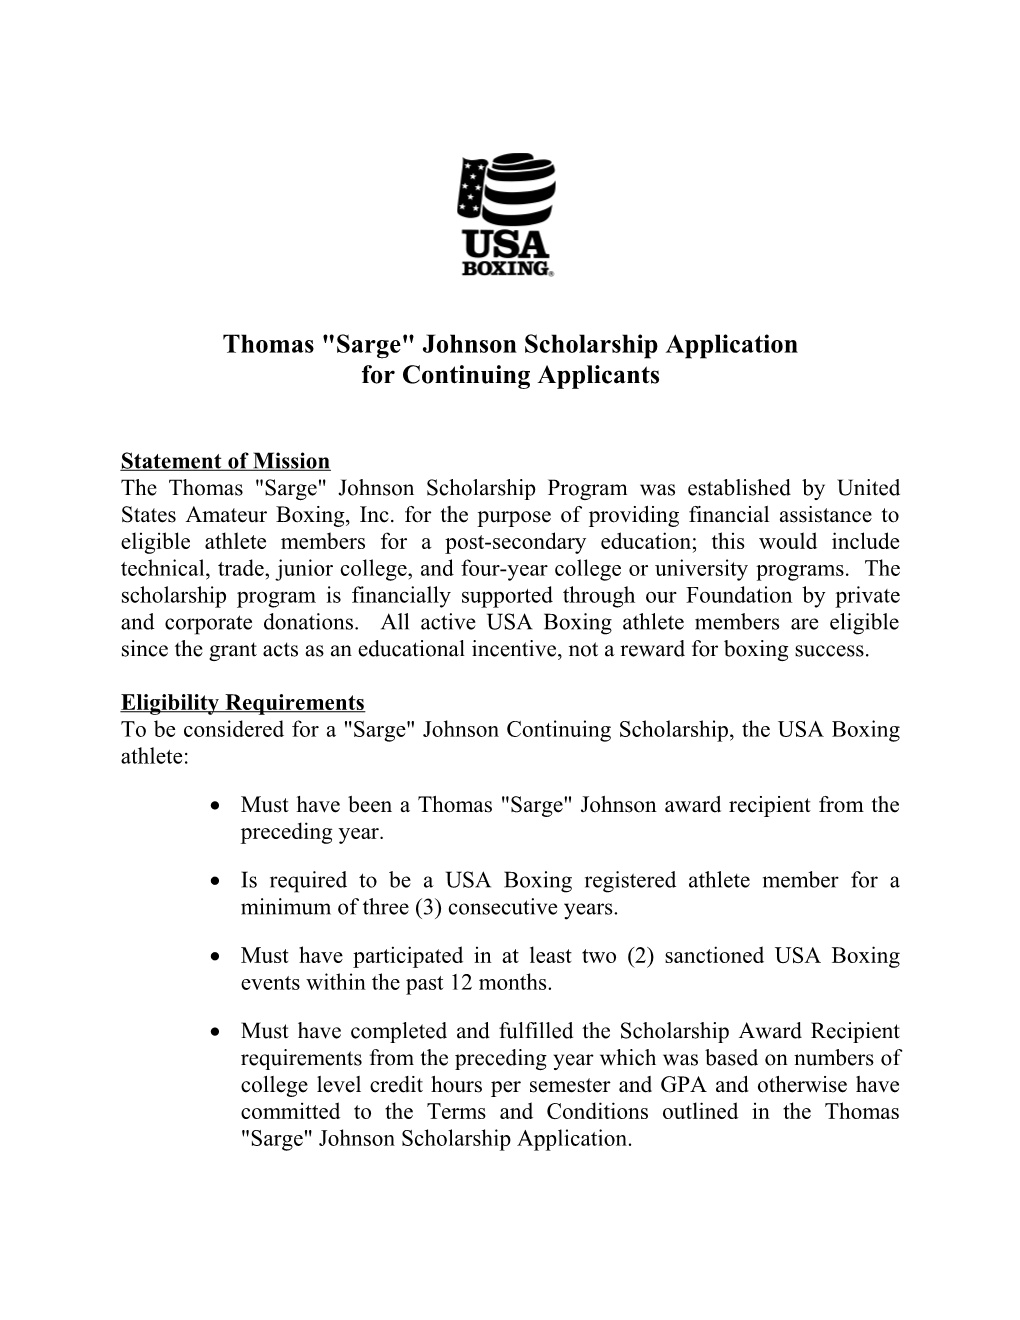 Thomas Sarge Johnson Scholarship Application